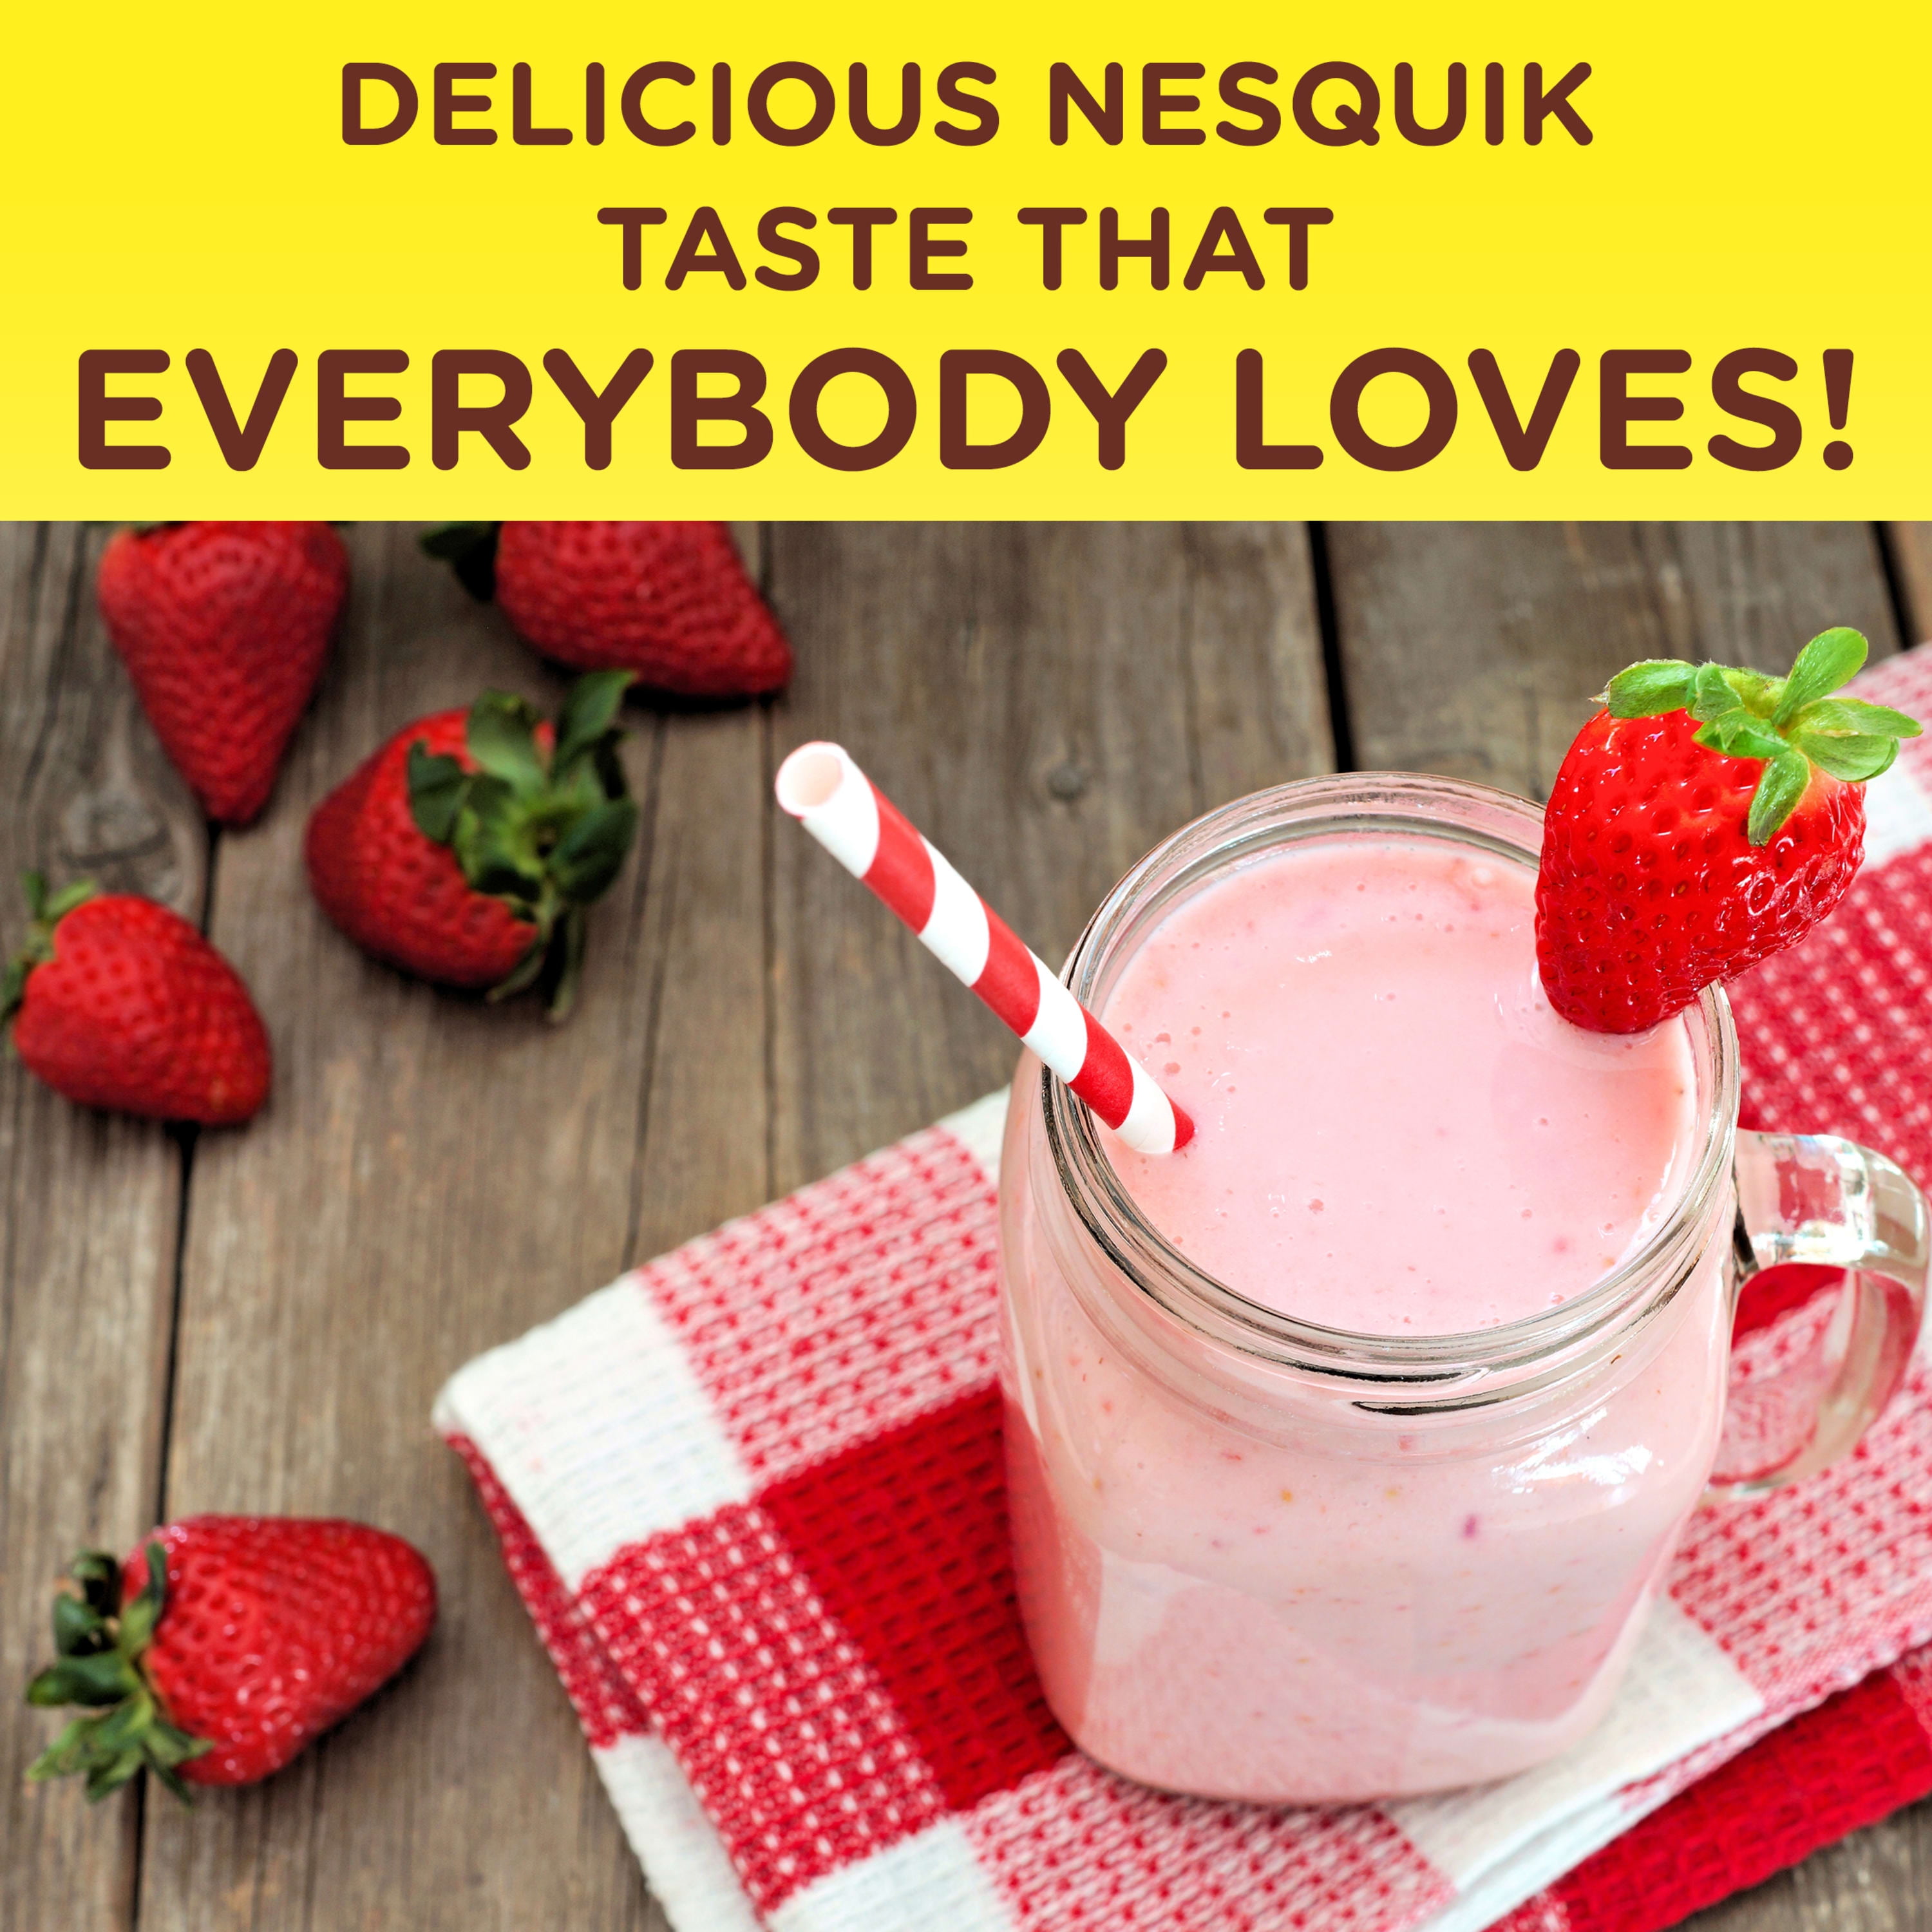 ♞,♘,♙,♟Nestle Nesquik Chocolate / Nesquik Strawberry / Nescafe